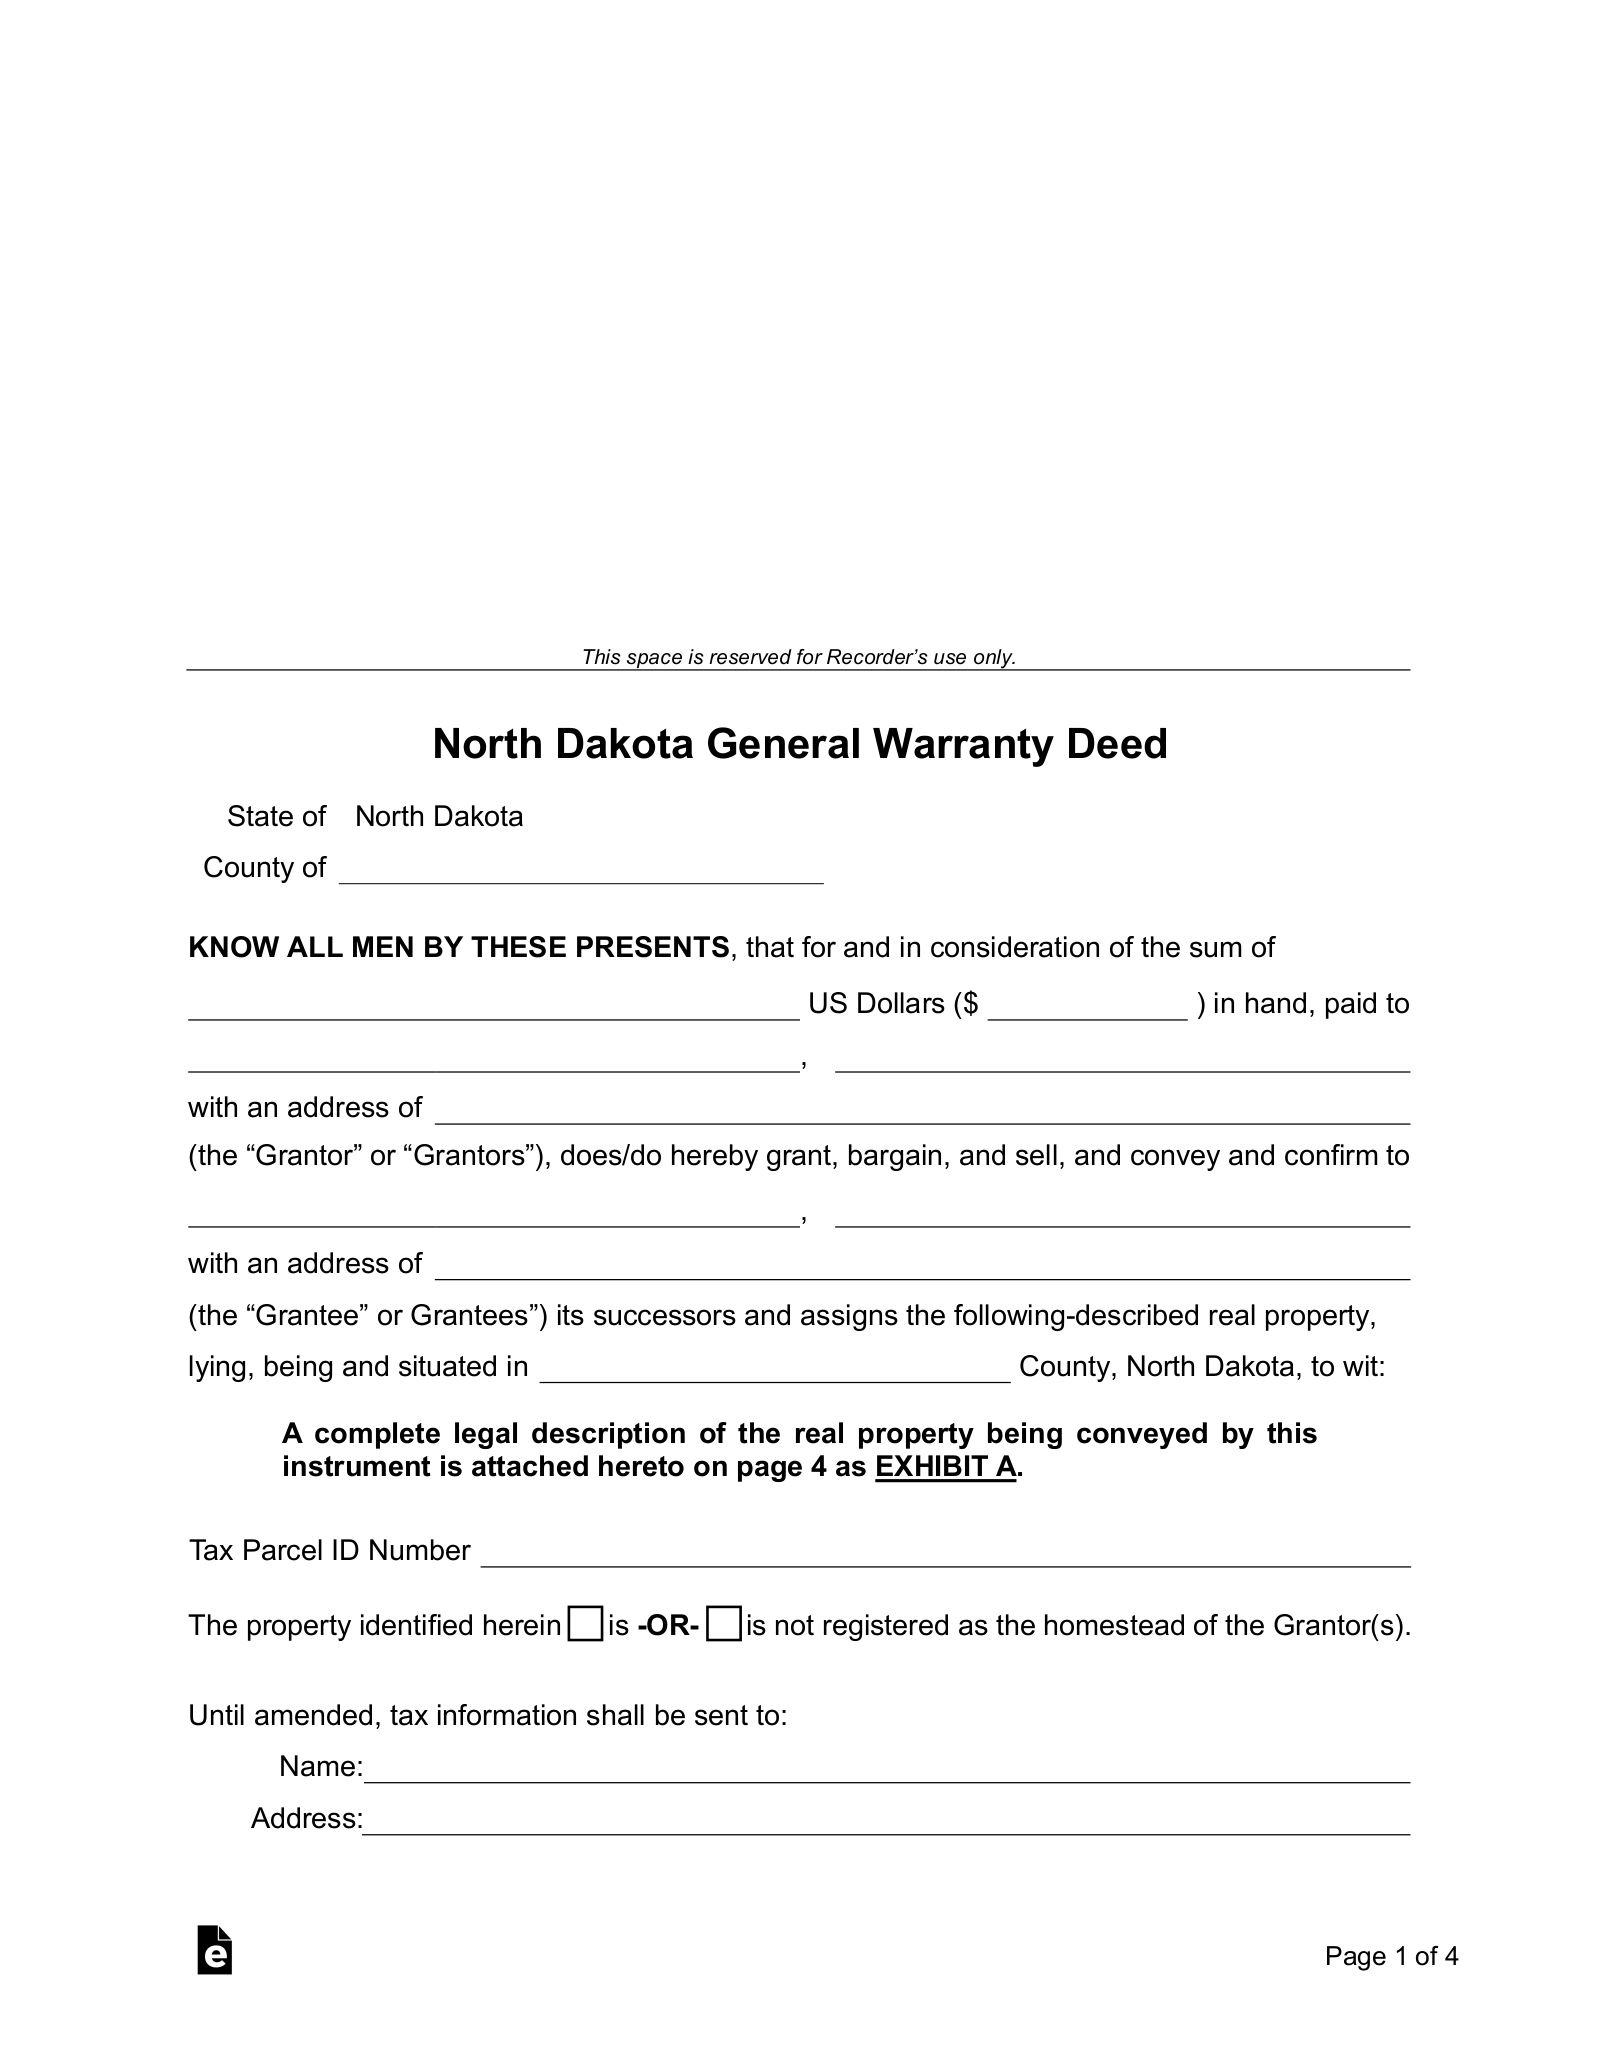 North Dakota General Warranty Deed Form